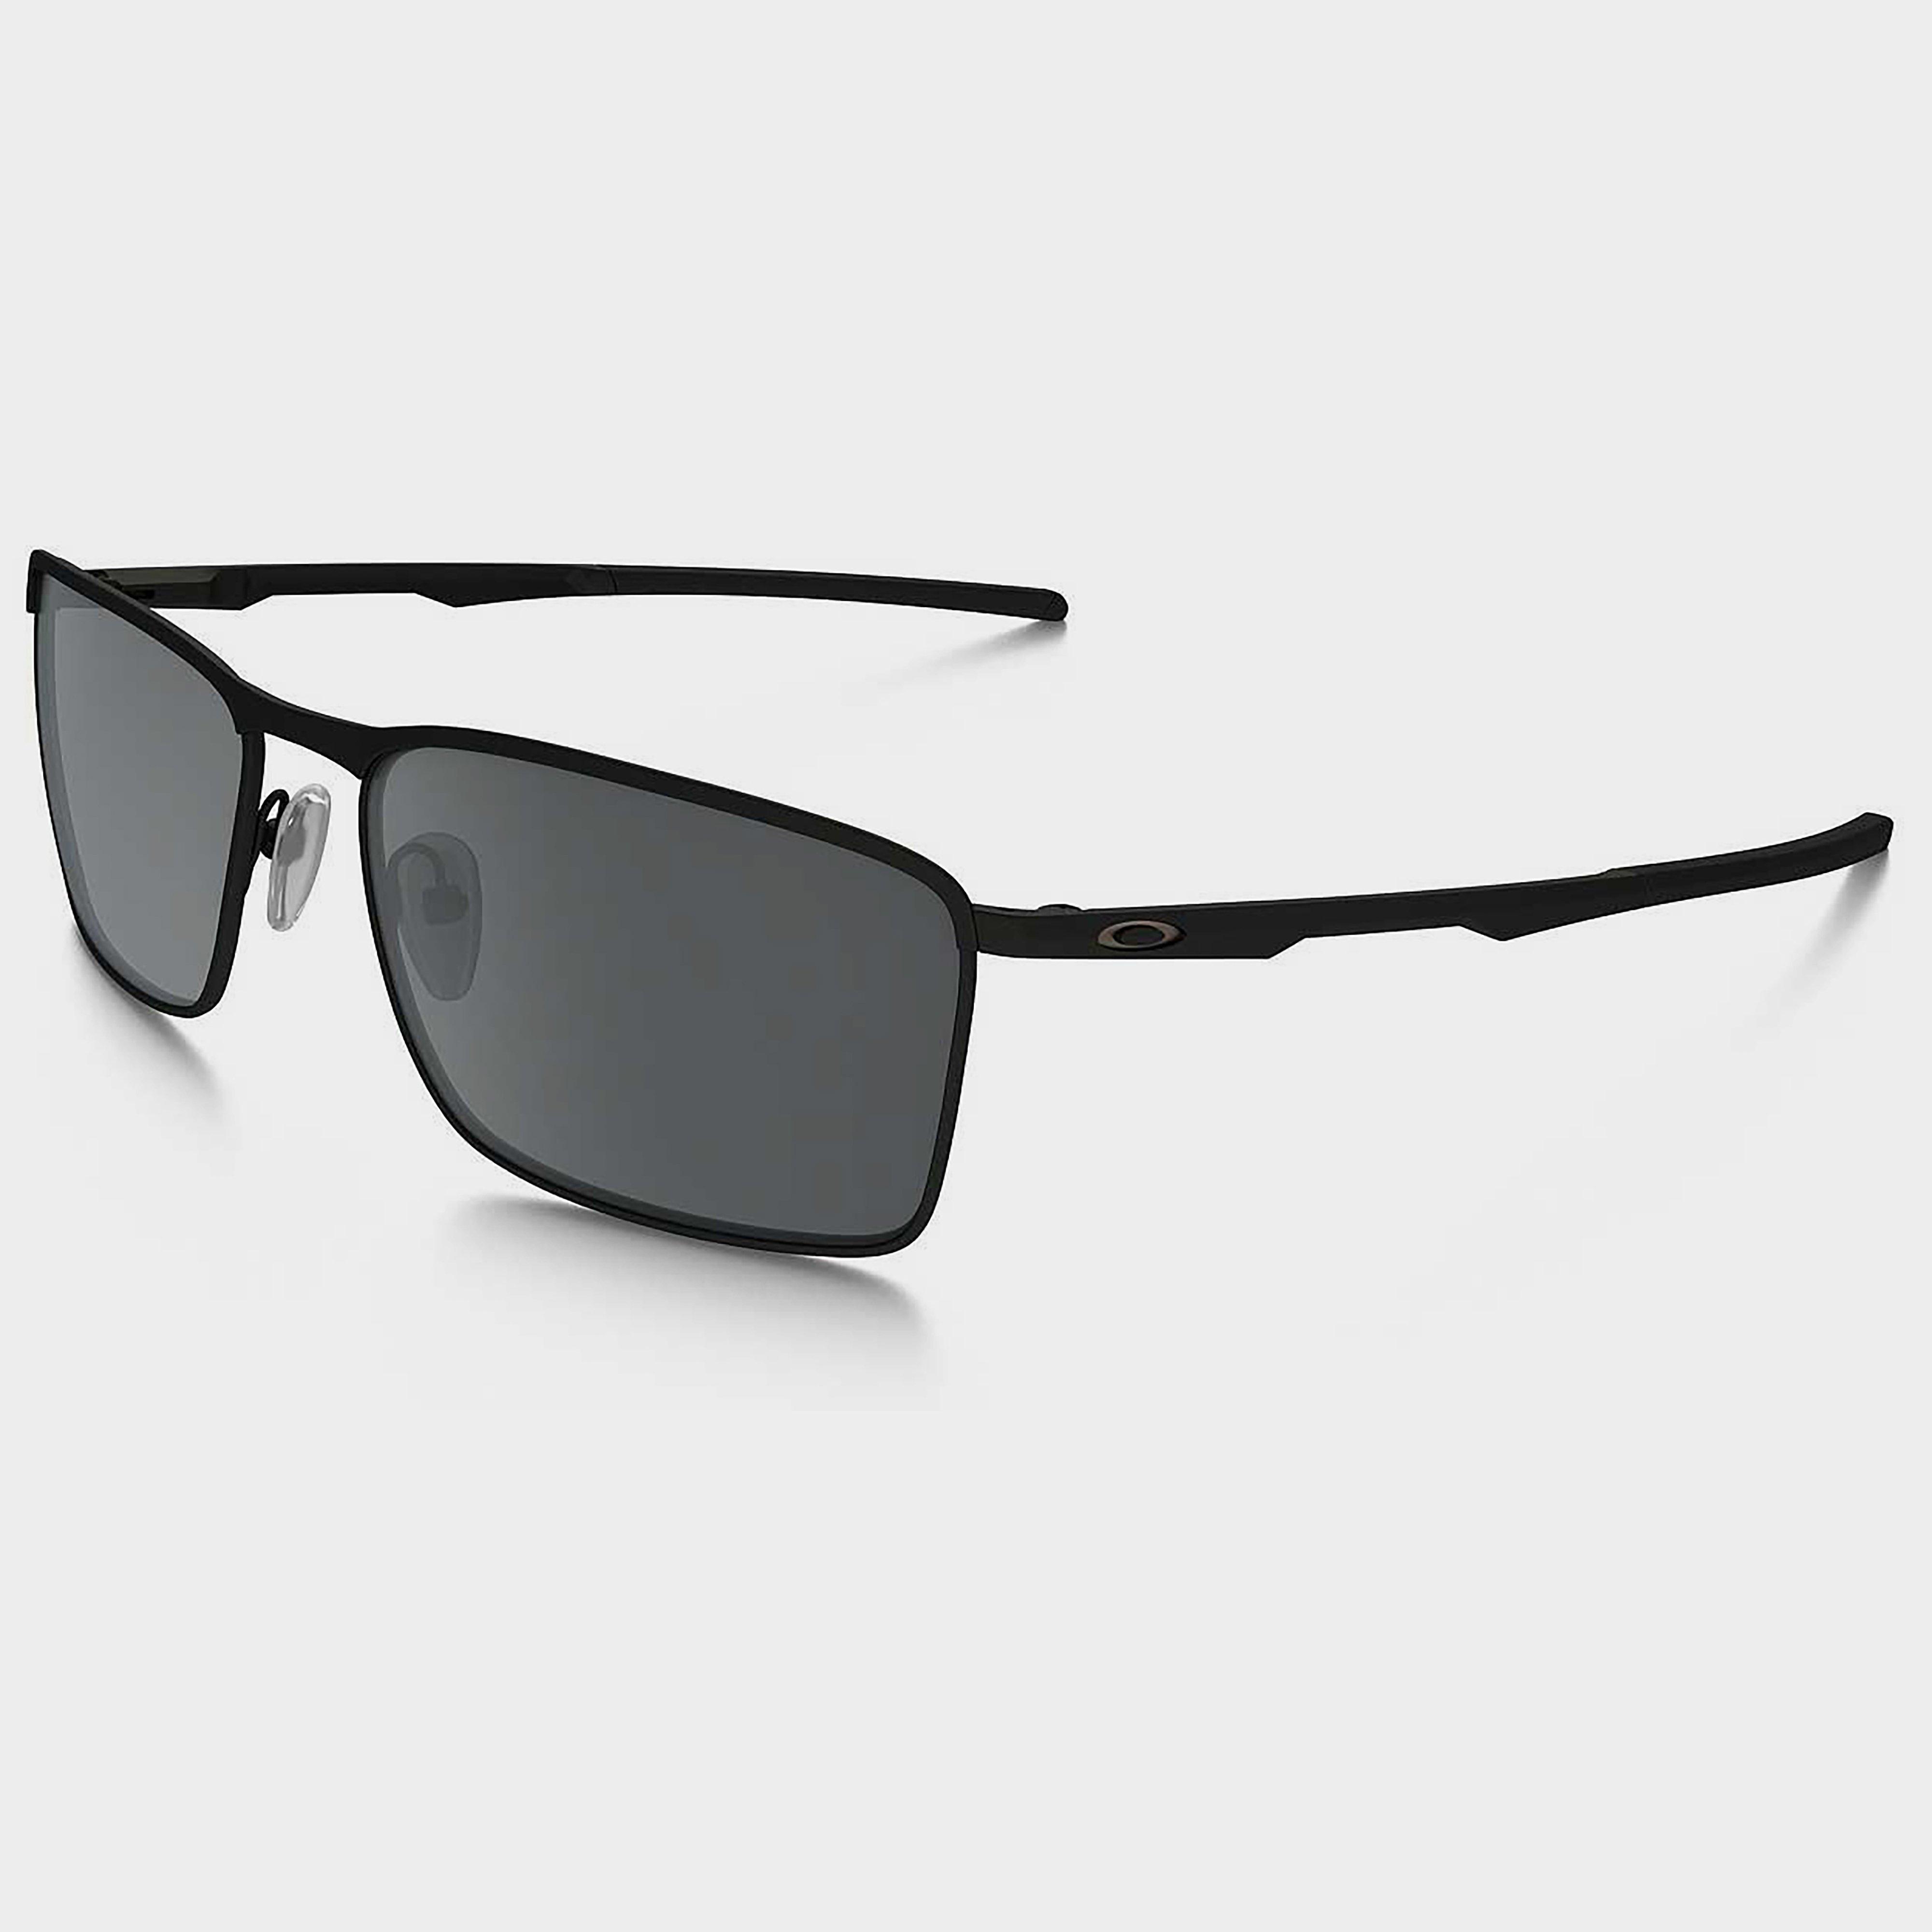  Oakley Conductor 6 Sunglasses (Matte Black/Iridium), Black